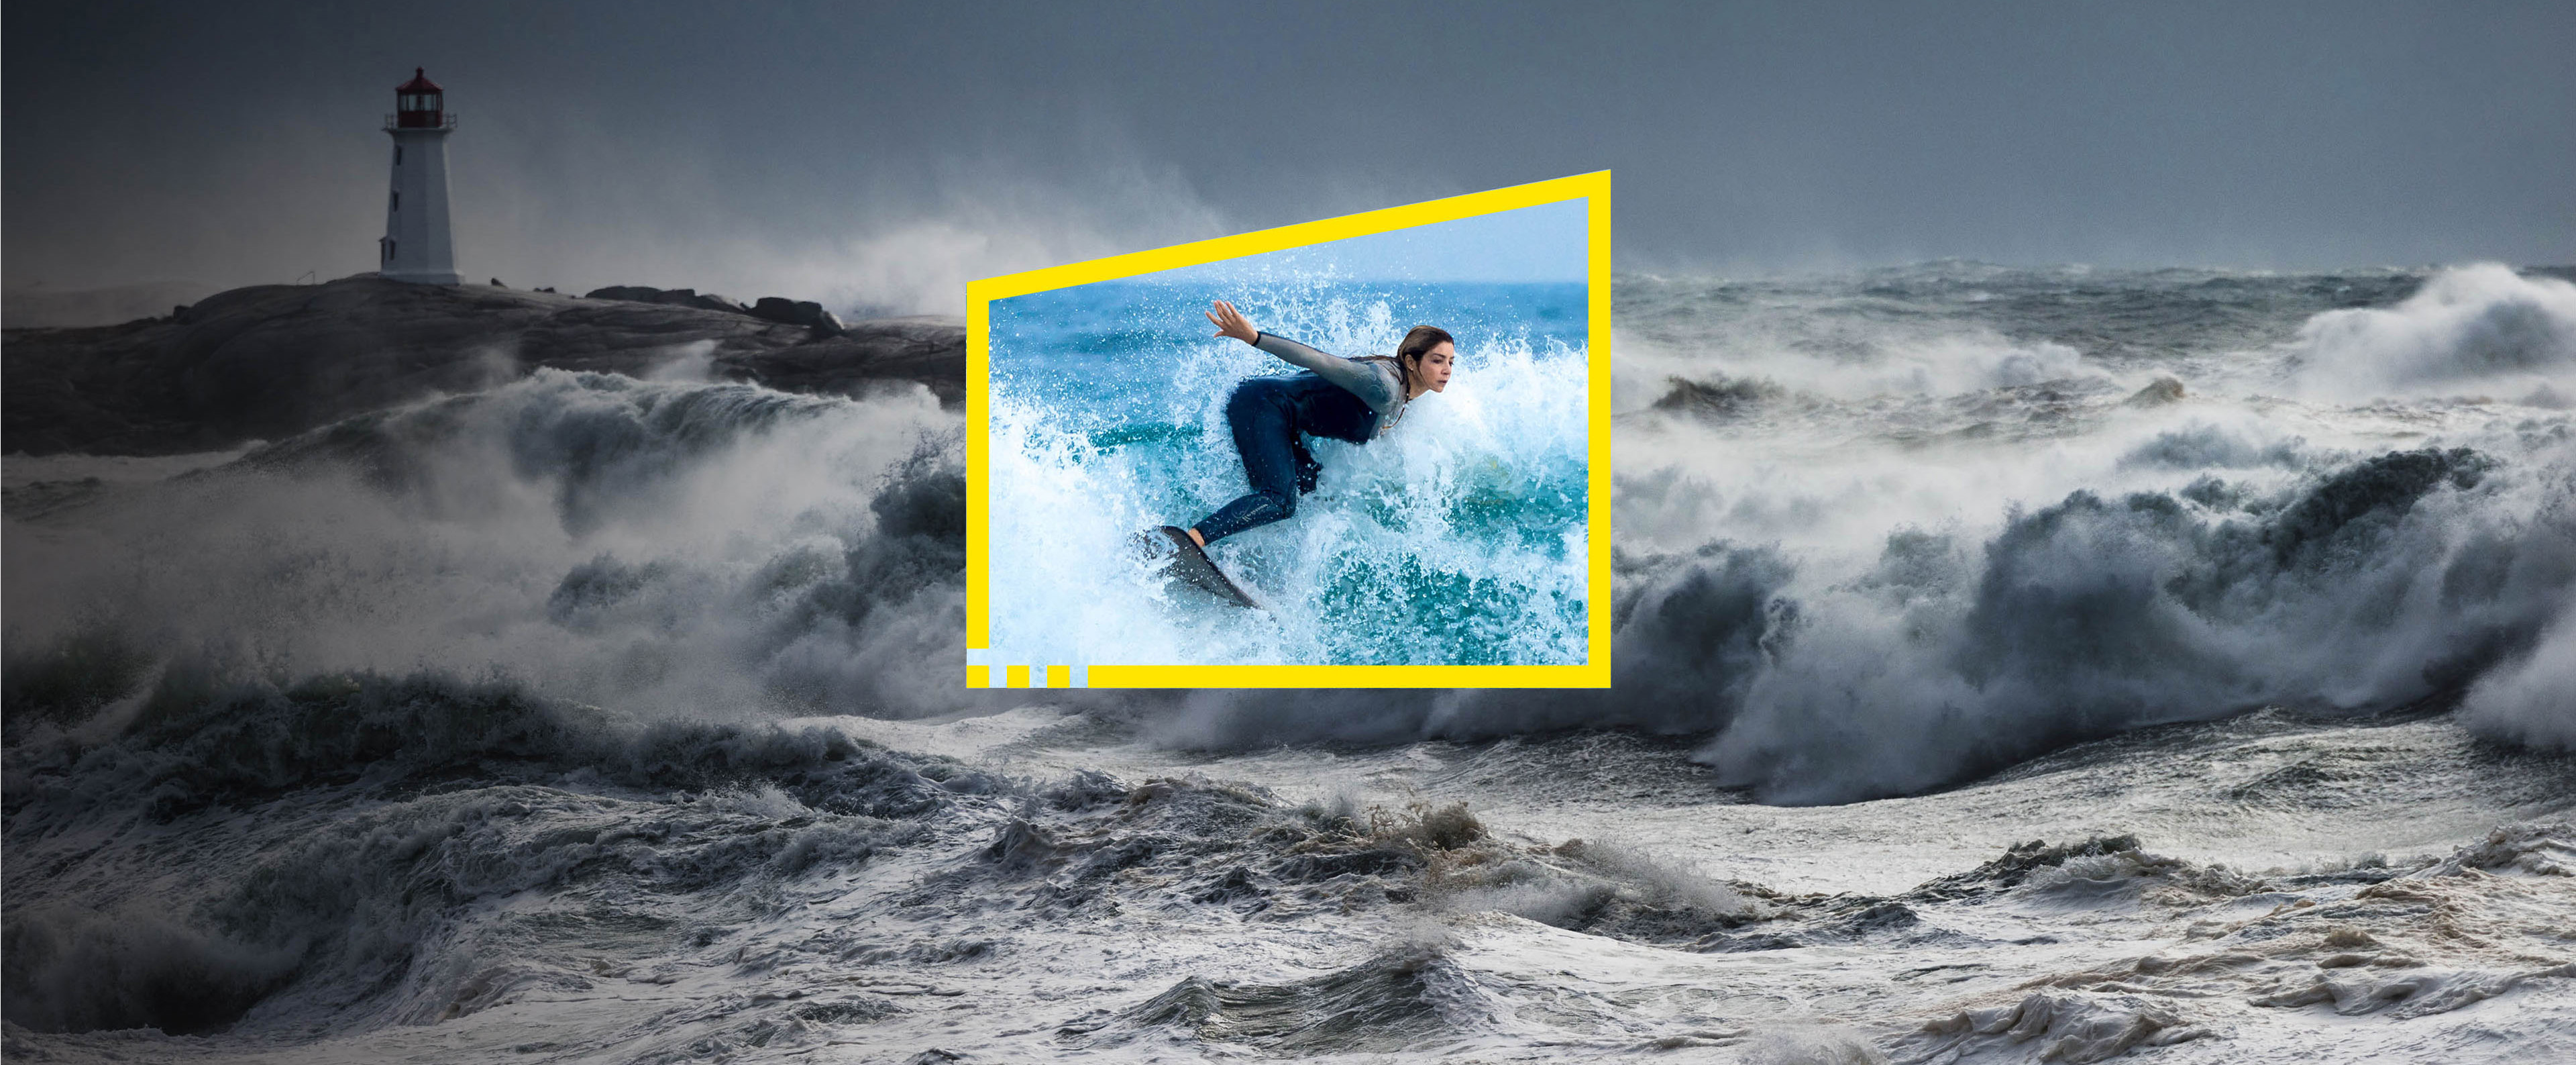 ryf surfer storm static